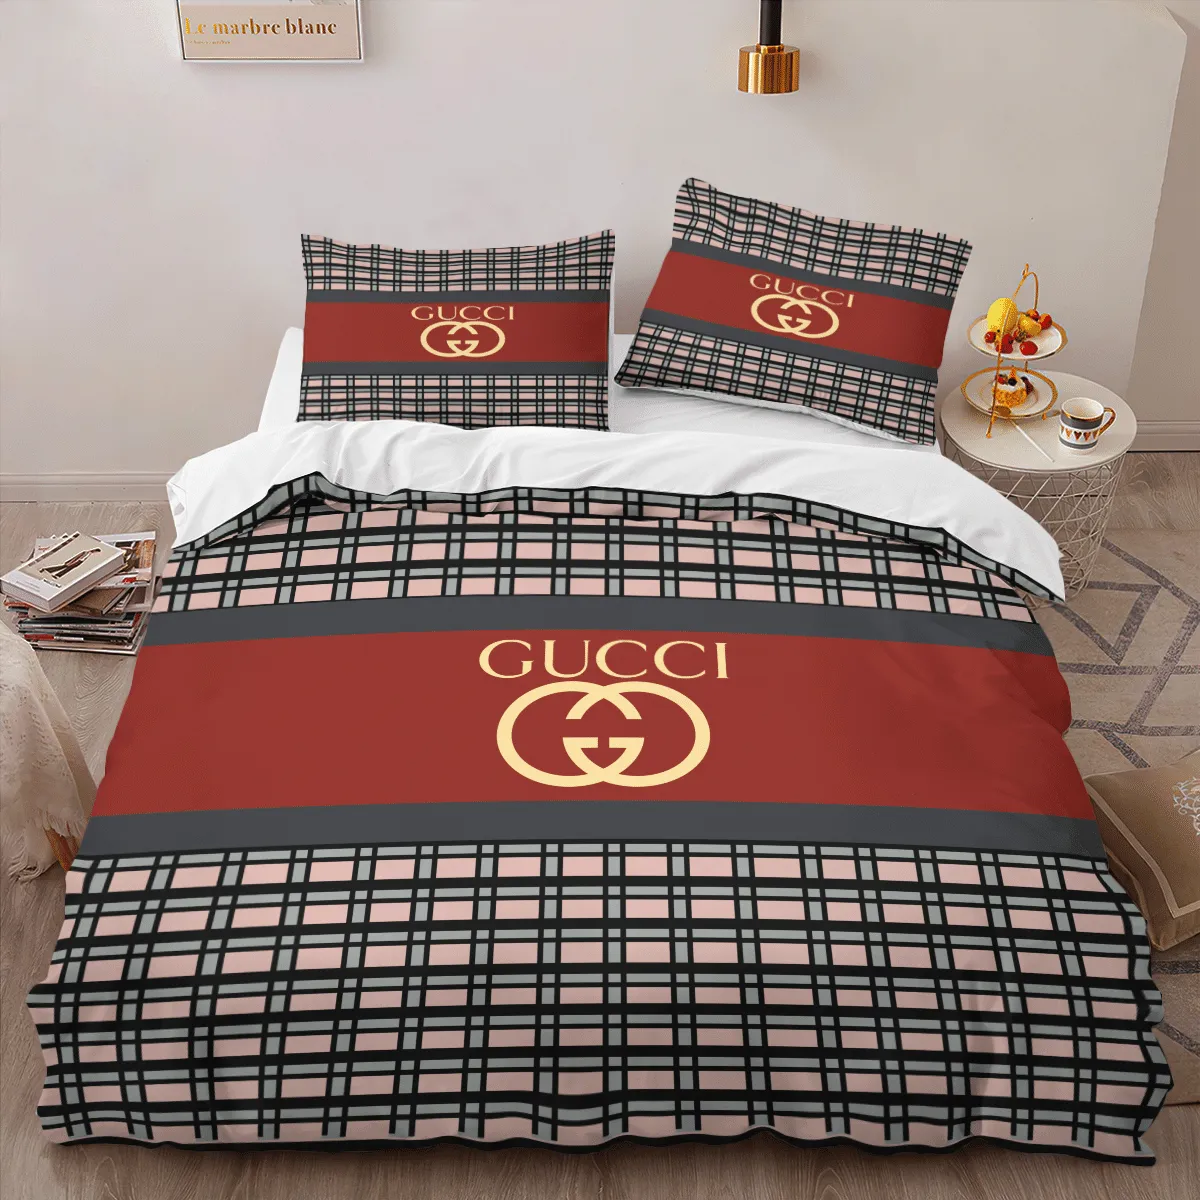 Gucci Caro Louis Vuitton Logo Brand Bedding Set Bedspread Luxury Home Decor Bedroom